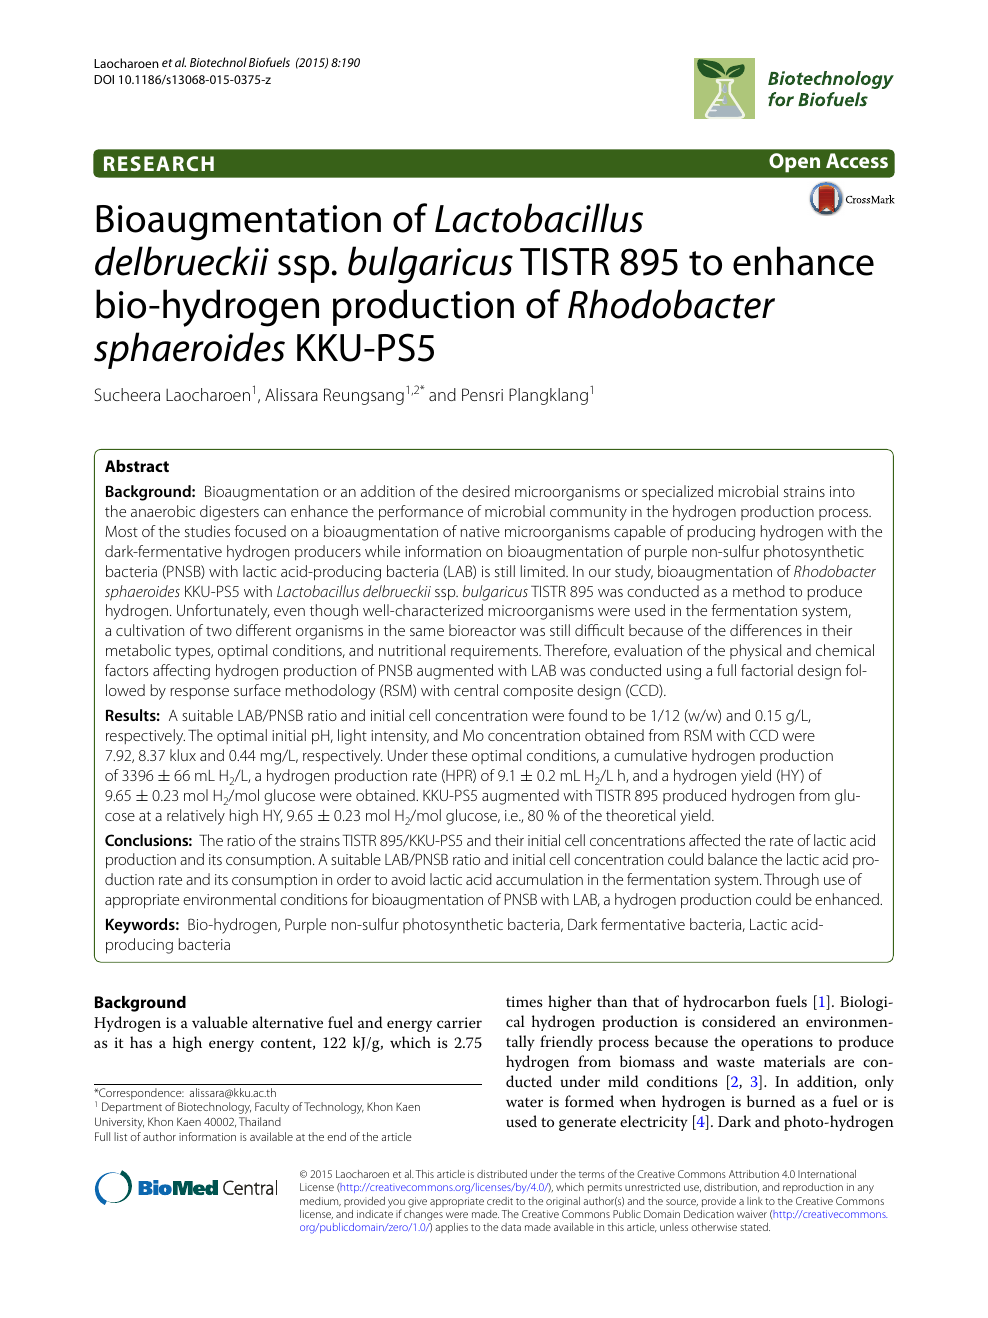 Bioaugmentation of Lactobacillus delbrueckii ssp. bulgaricus TISTR 